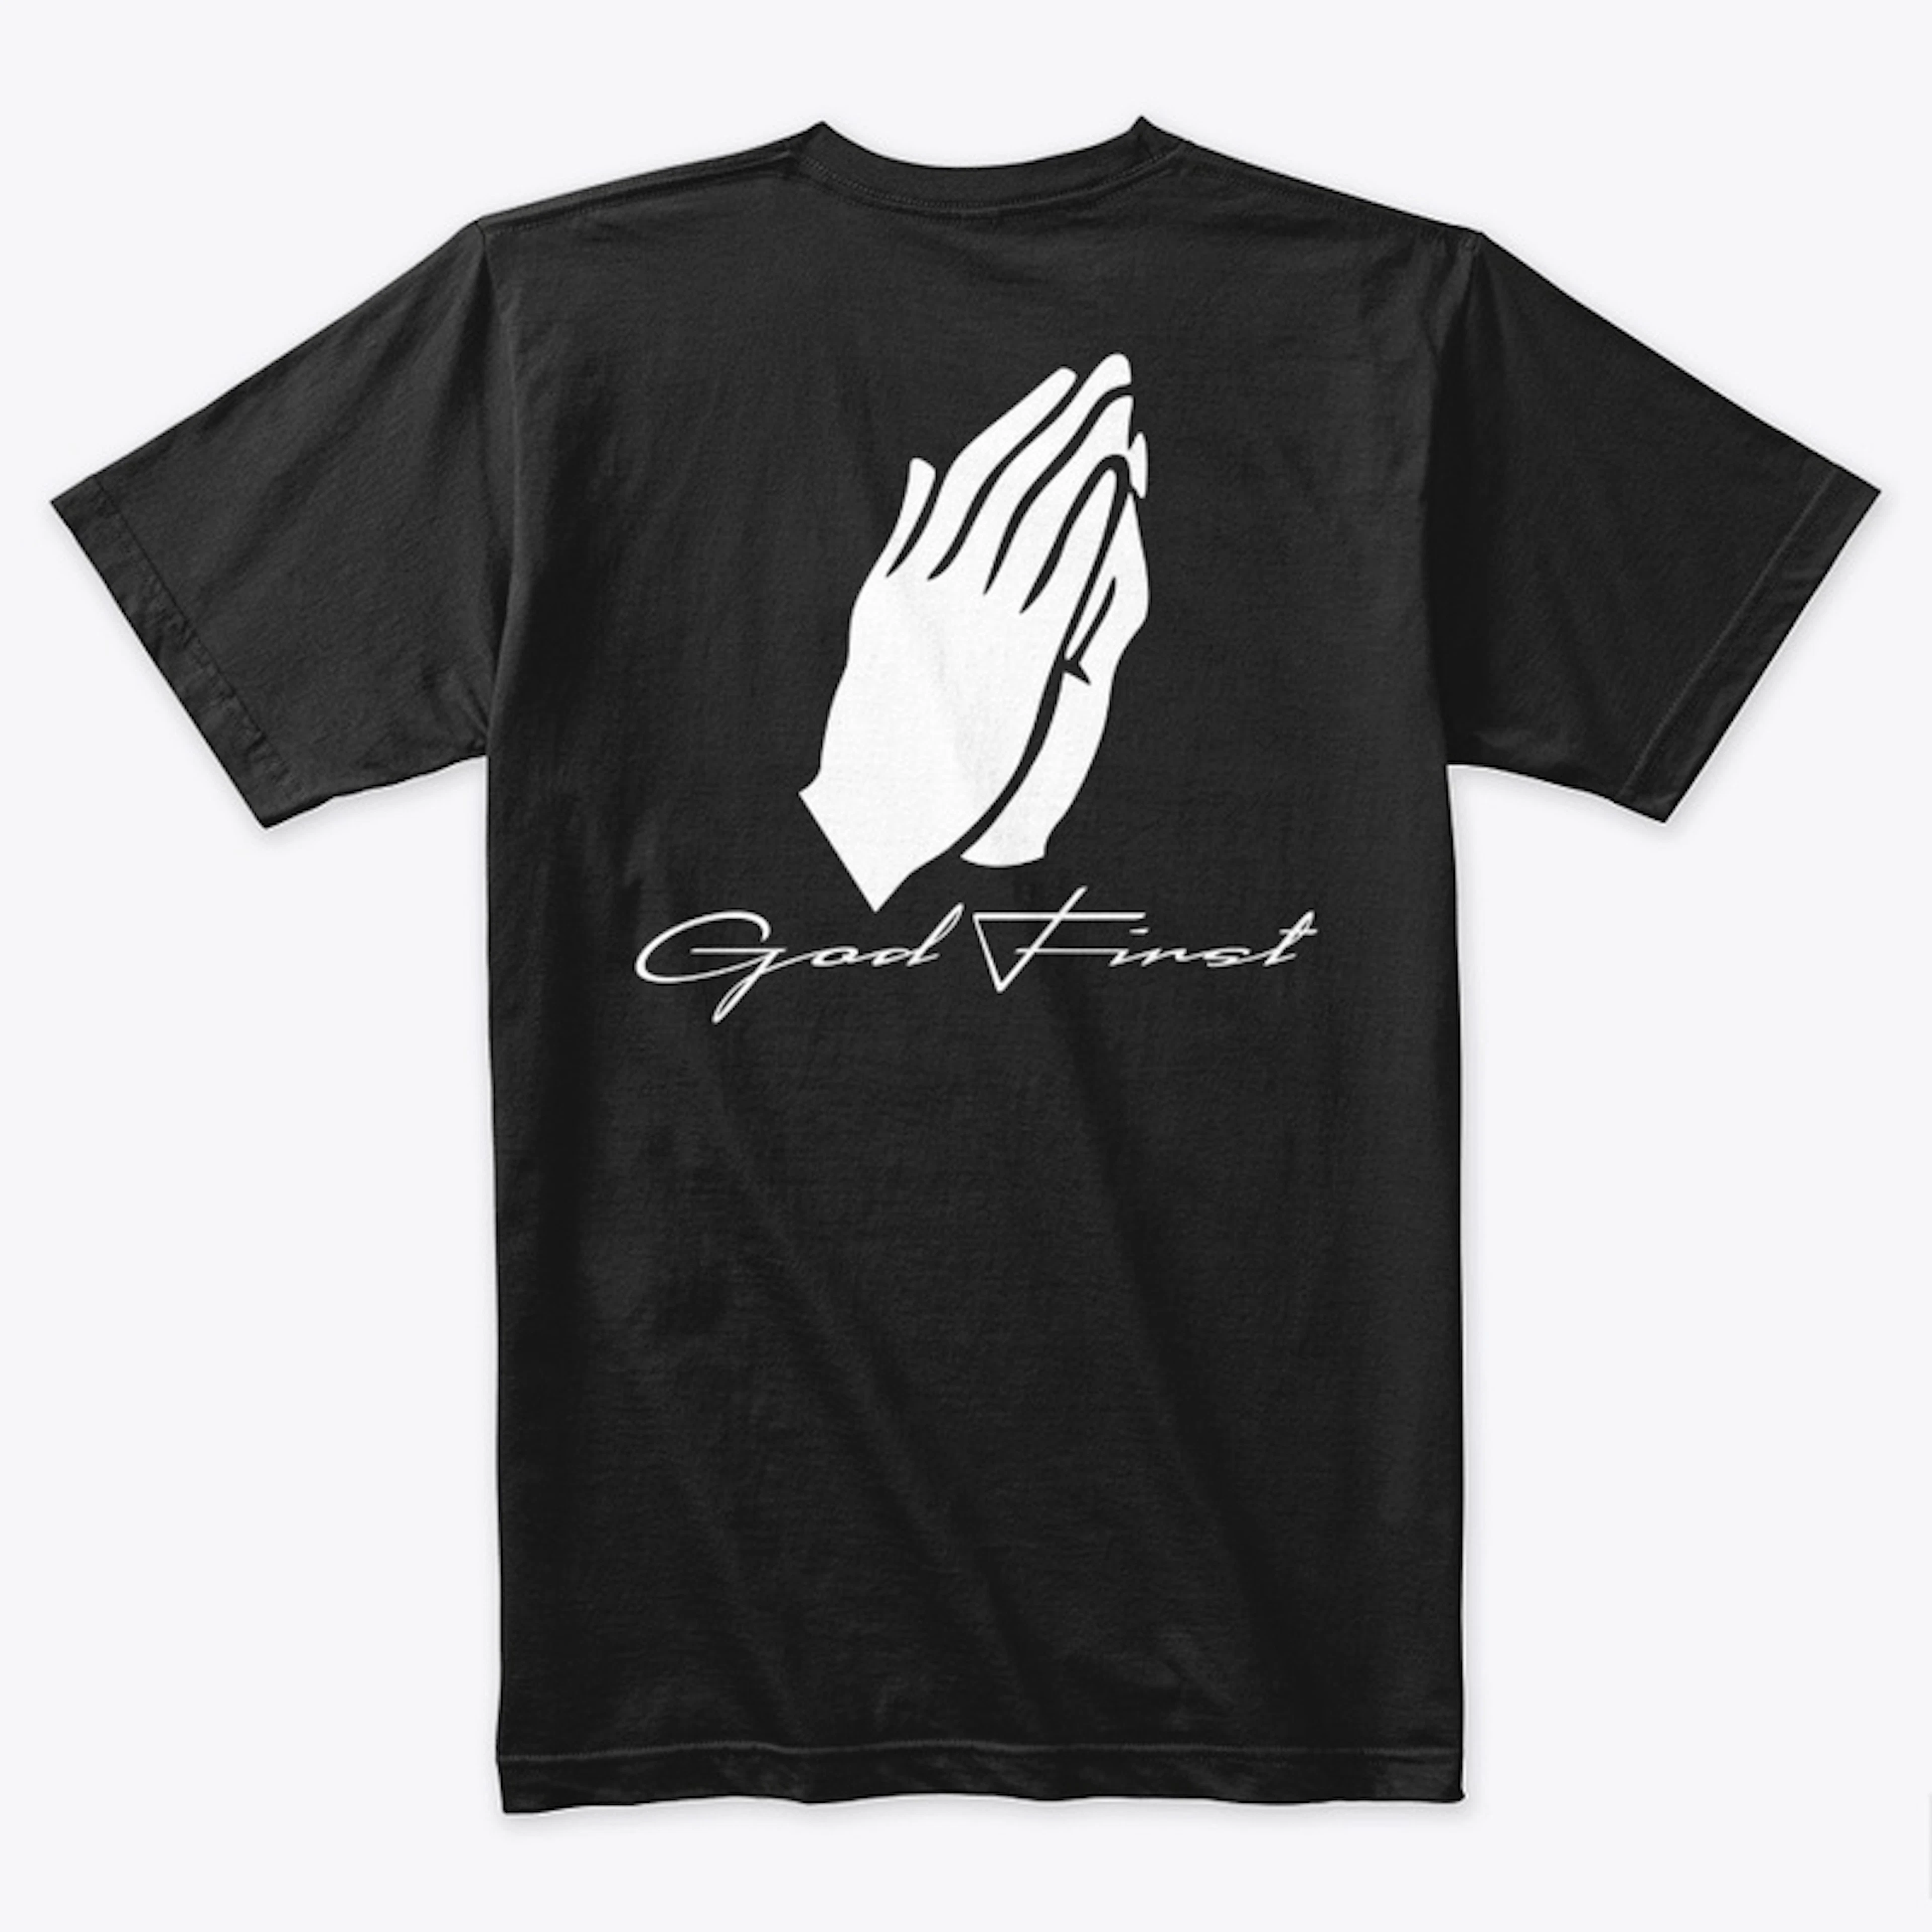 Prayer hands - Big